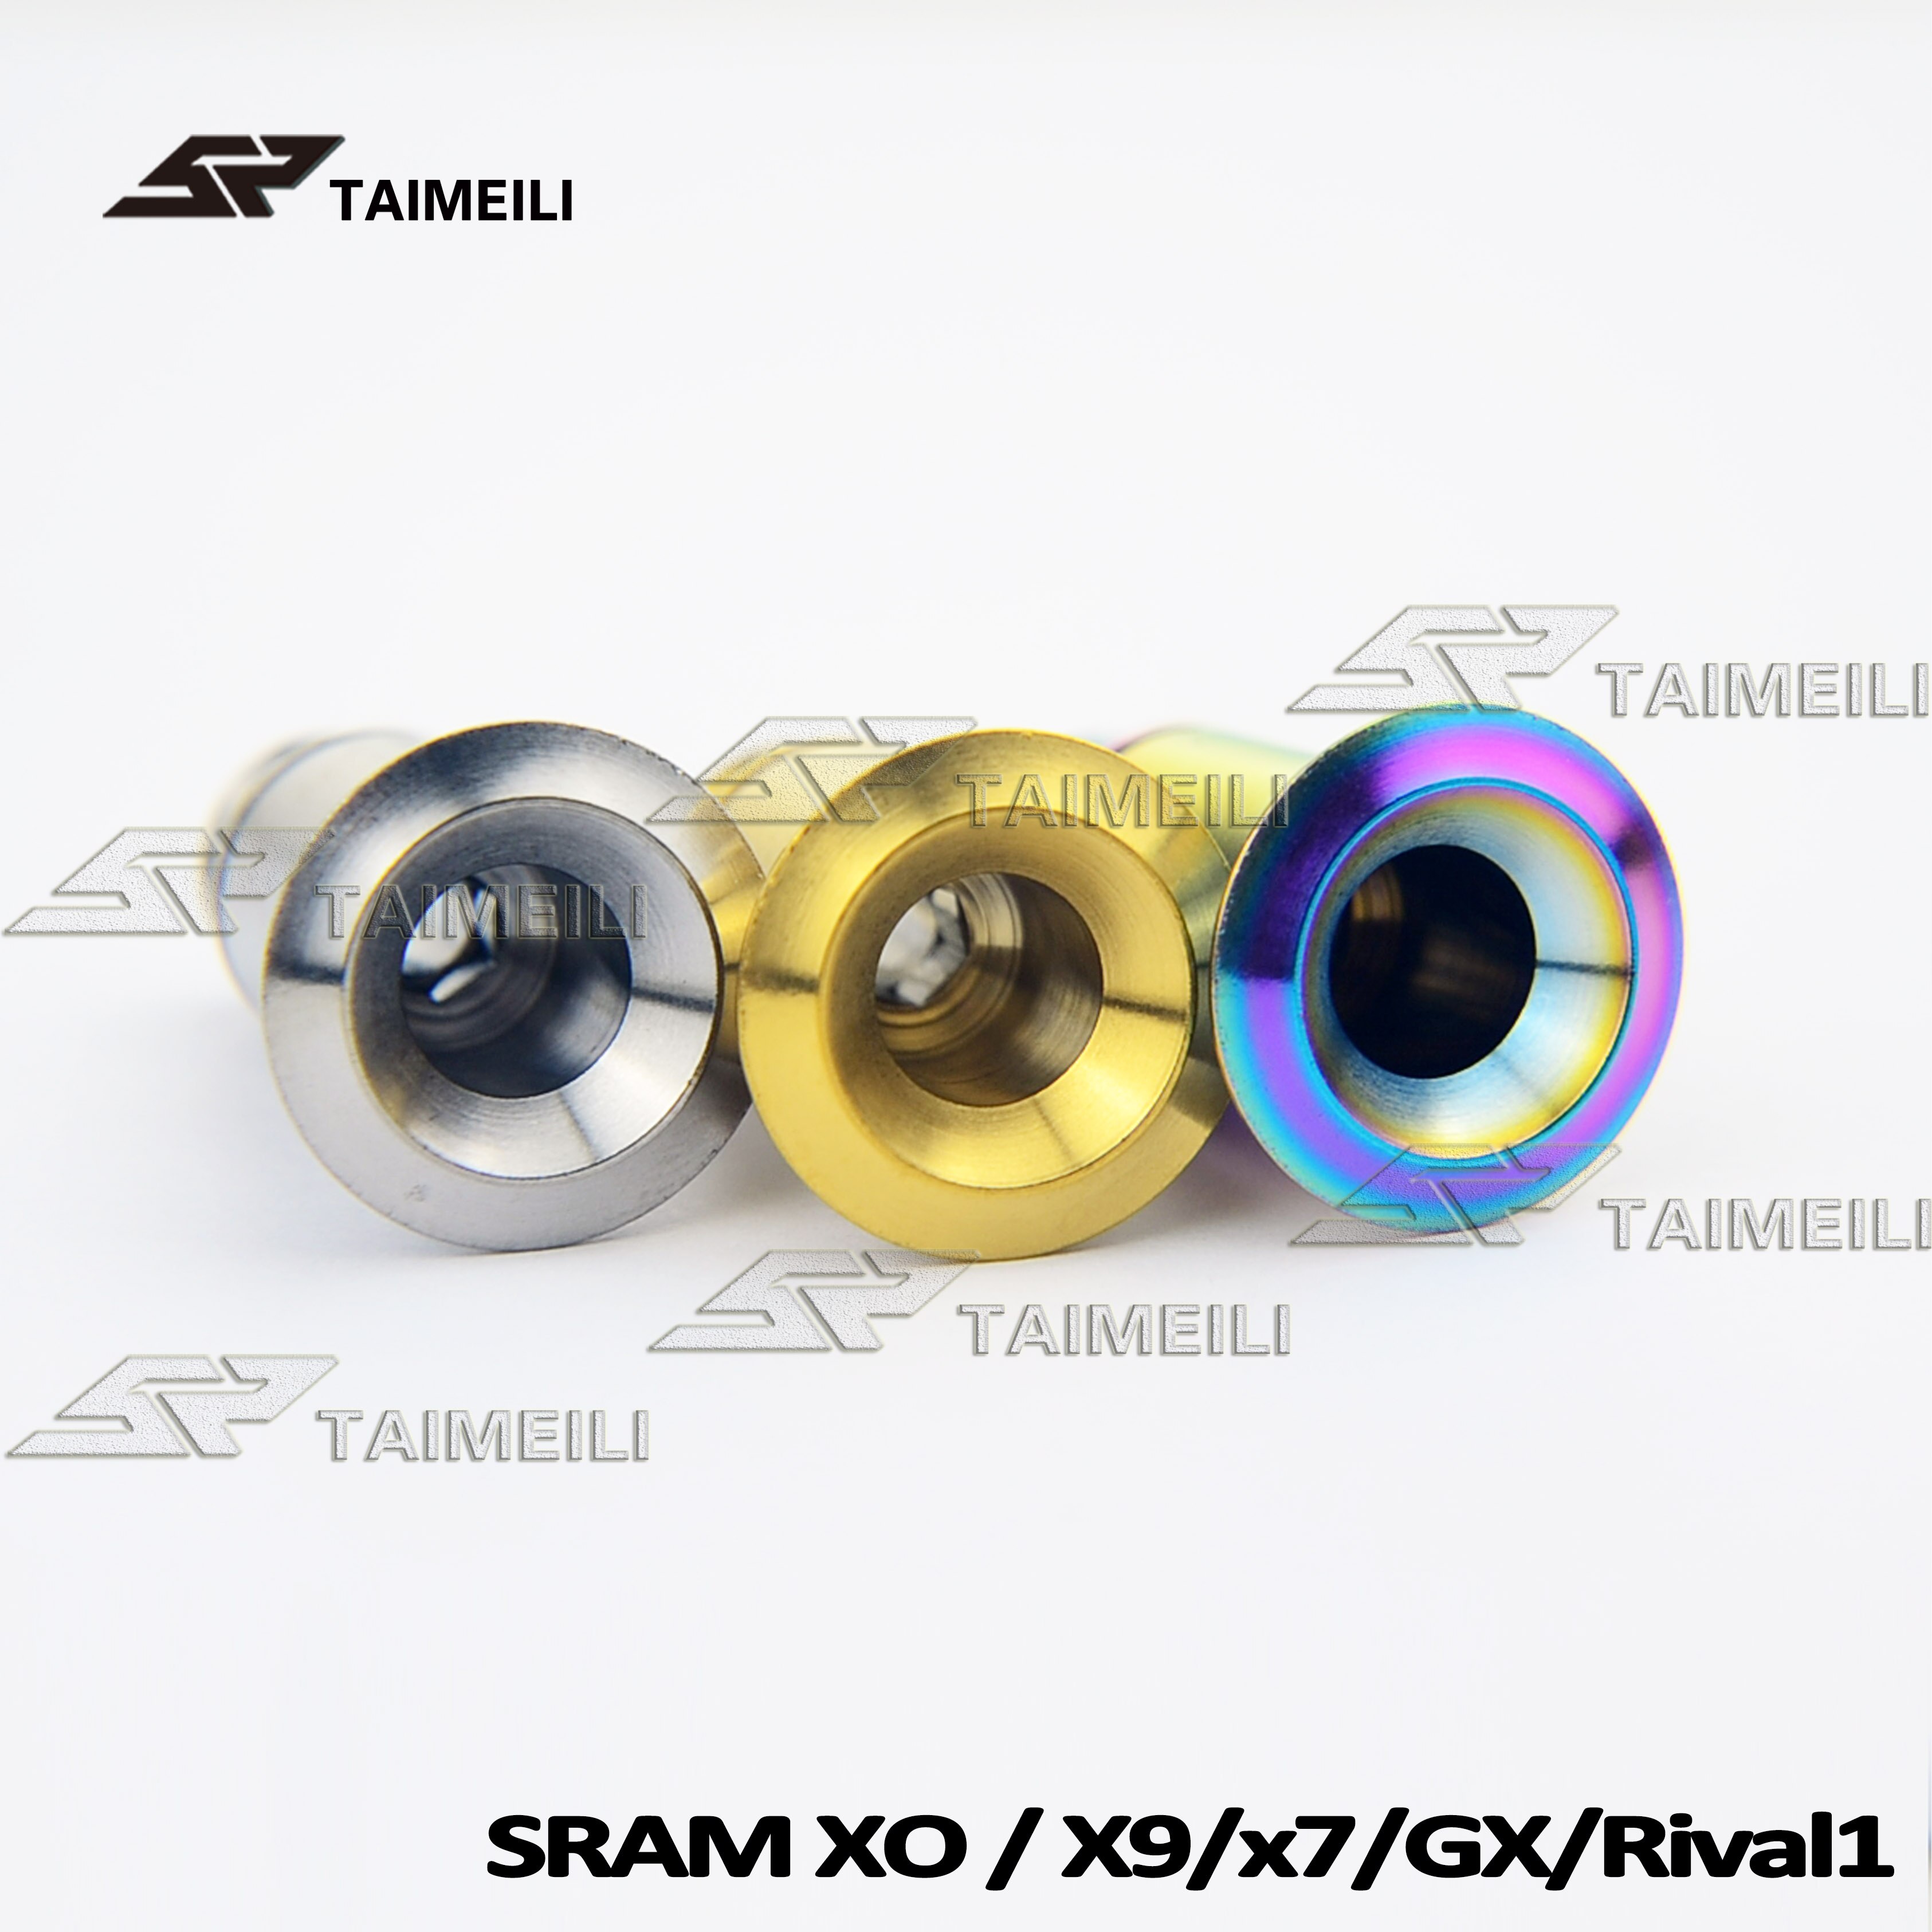 Taimeili sram xo  / x9 x 7gx /  rival 1 skifteraksel fastgørelsesskruer  gr5 titanium skruer patch